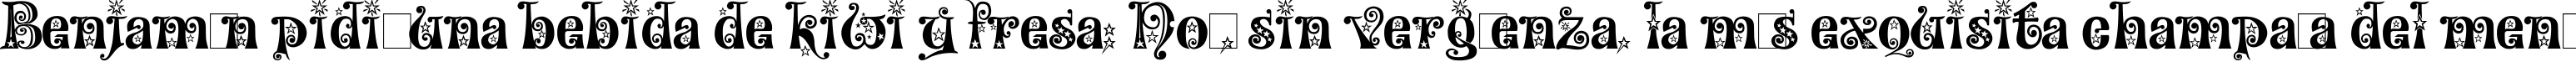 Пример написания шрифтом Wonderland Stars текста на испанском